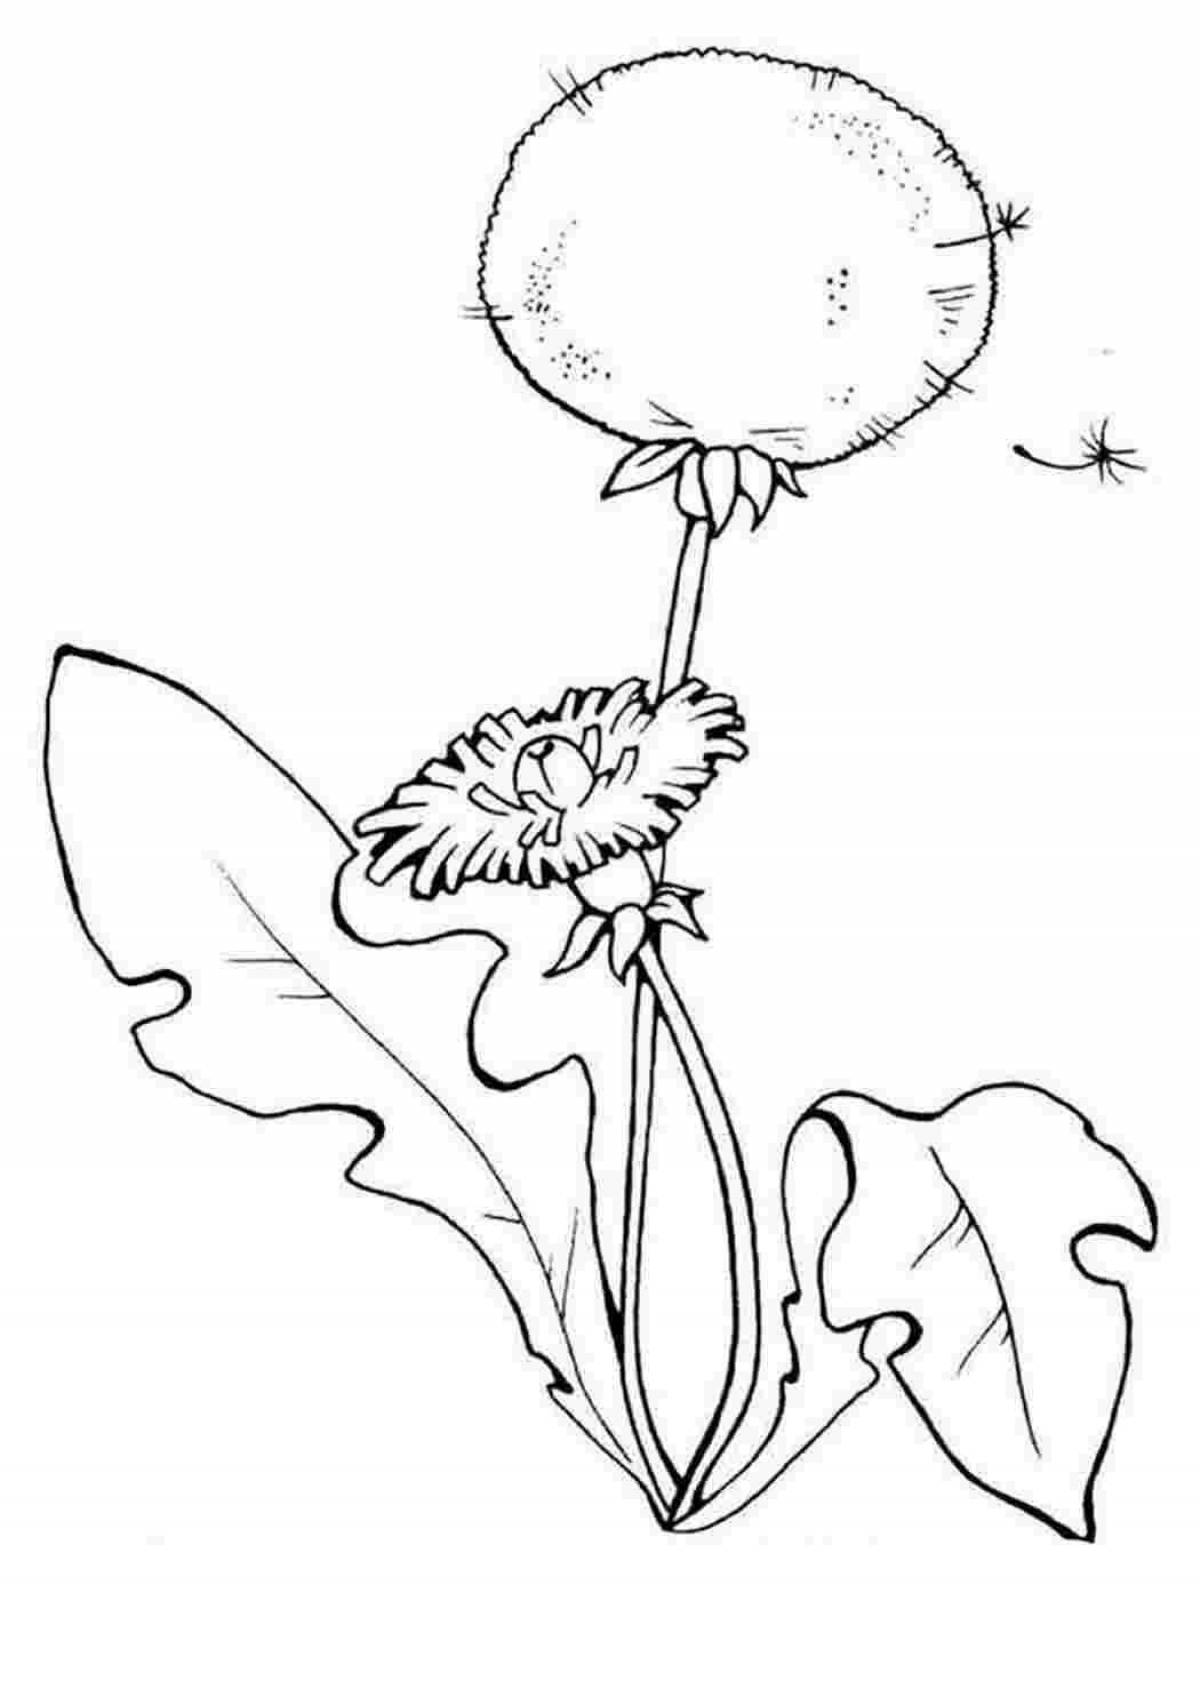 Adorable dandelion coloring book for kids